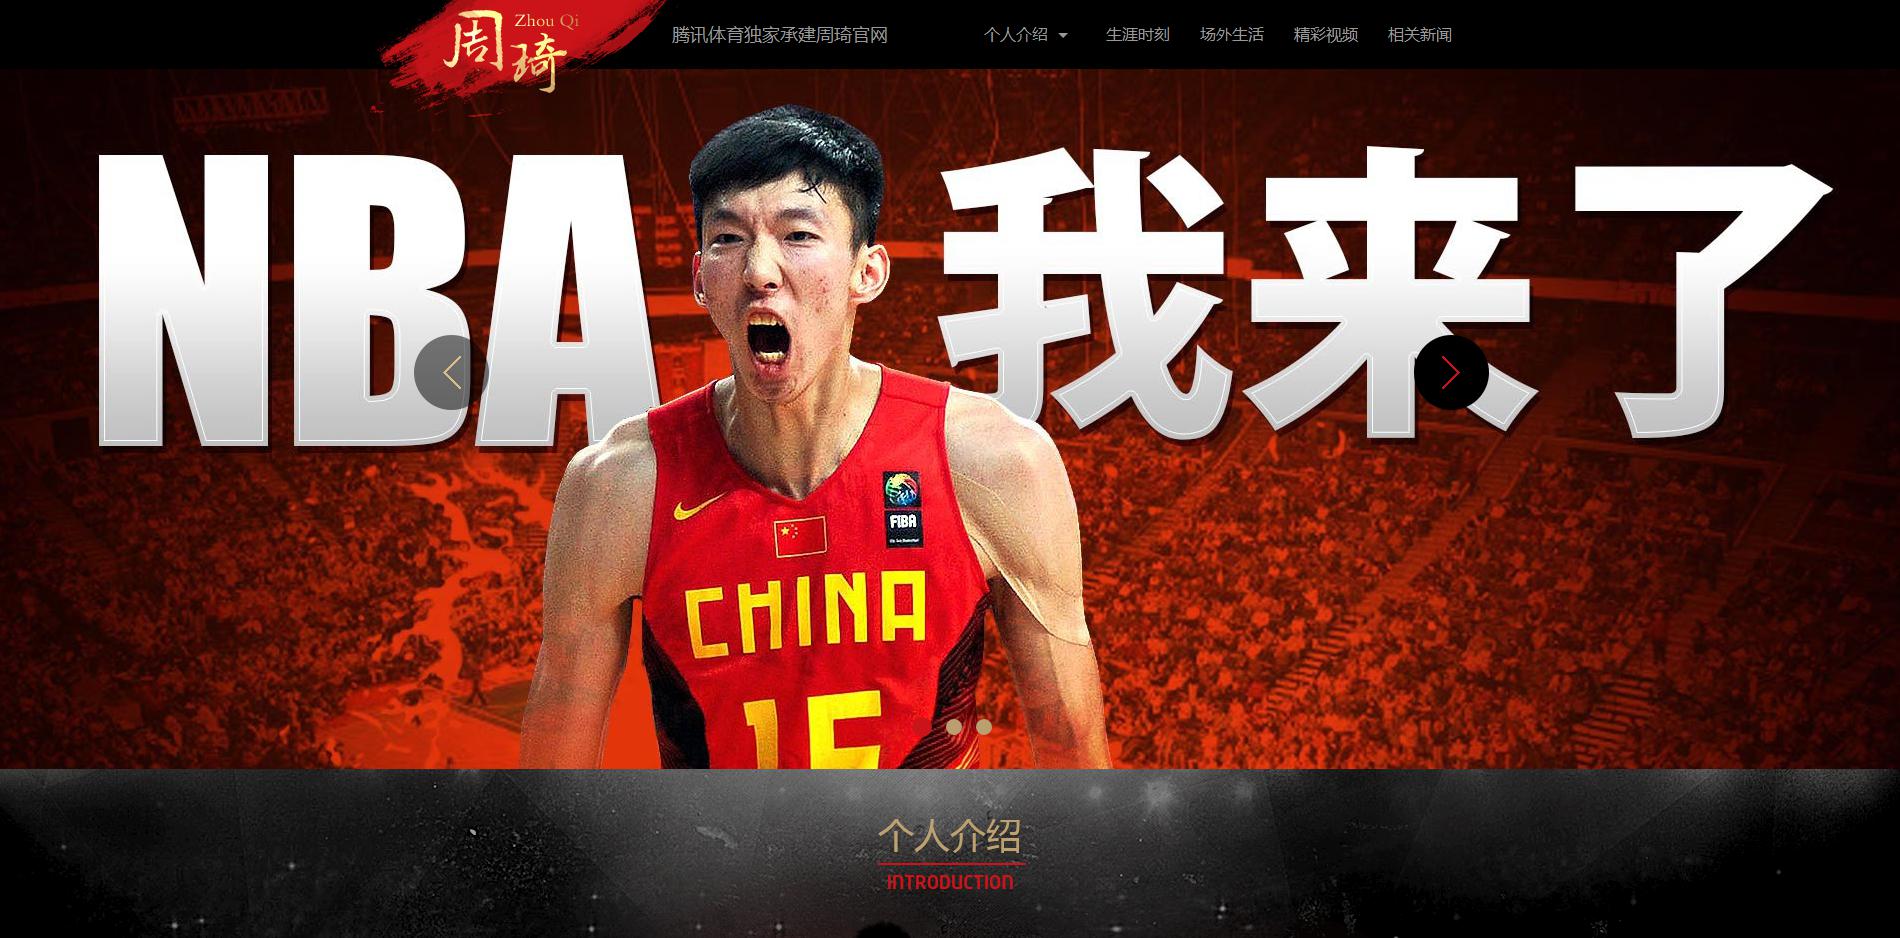 nba中文网专栏 NBA中文网居然为周琦开专栏(1)